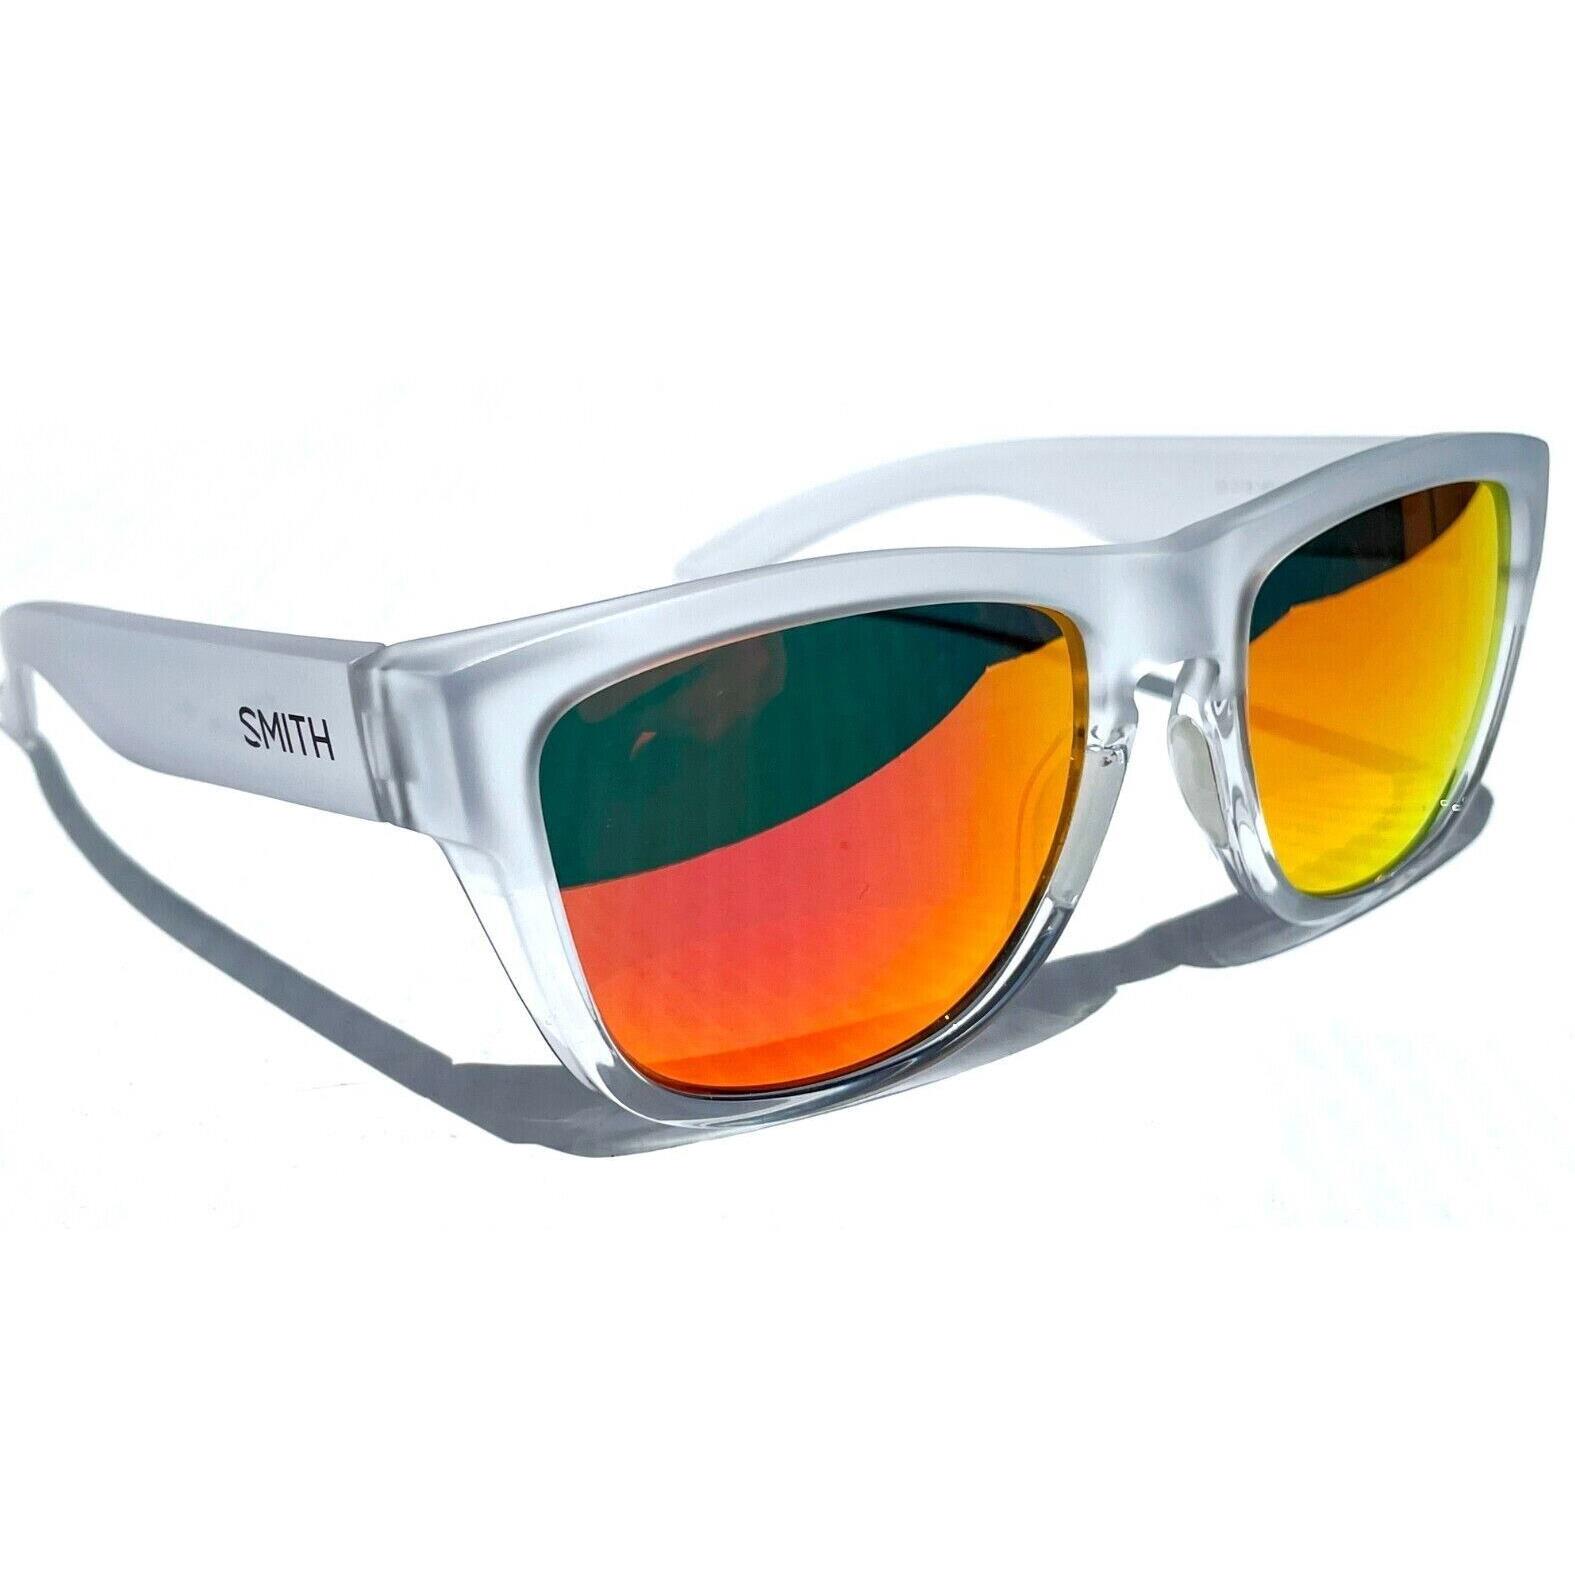 Smith Optics sunglasses Optic Clark - Matte Clear Frame, Red Lens 2